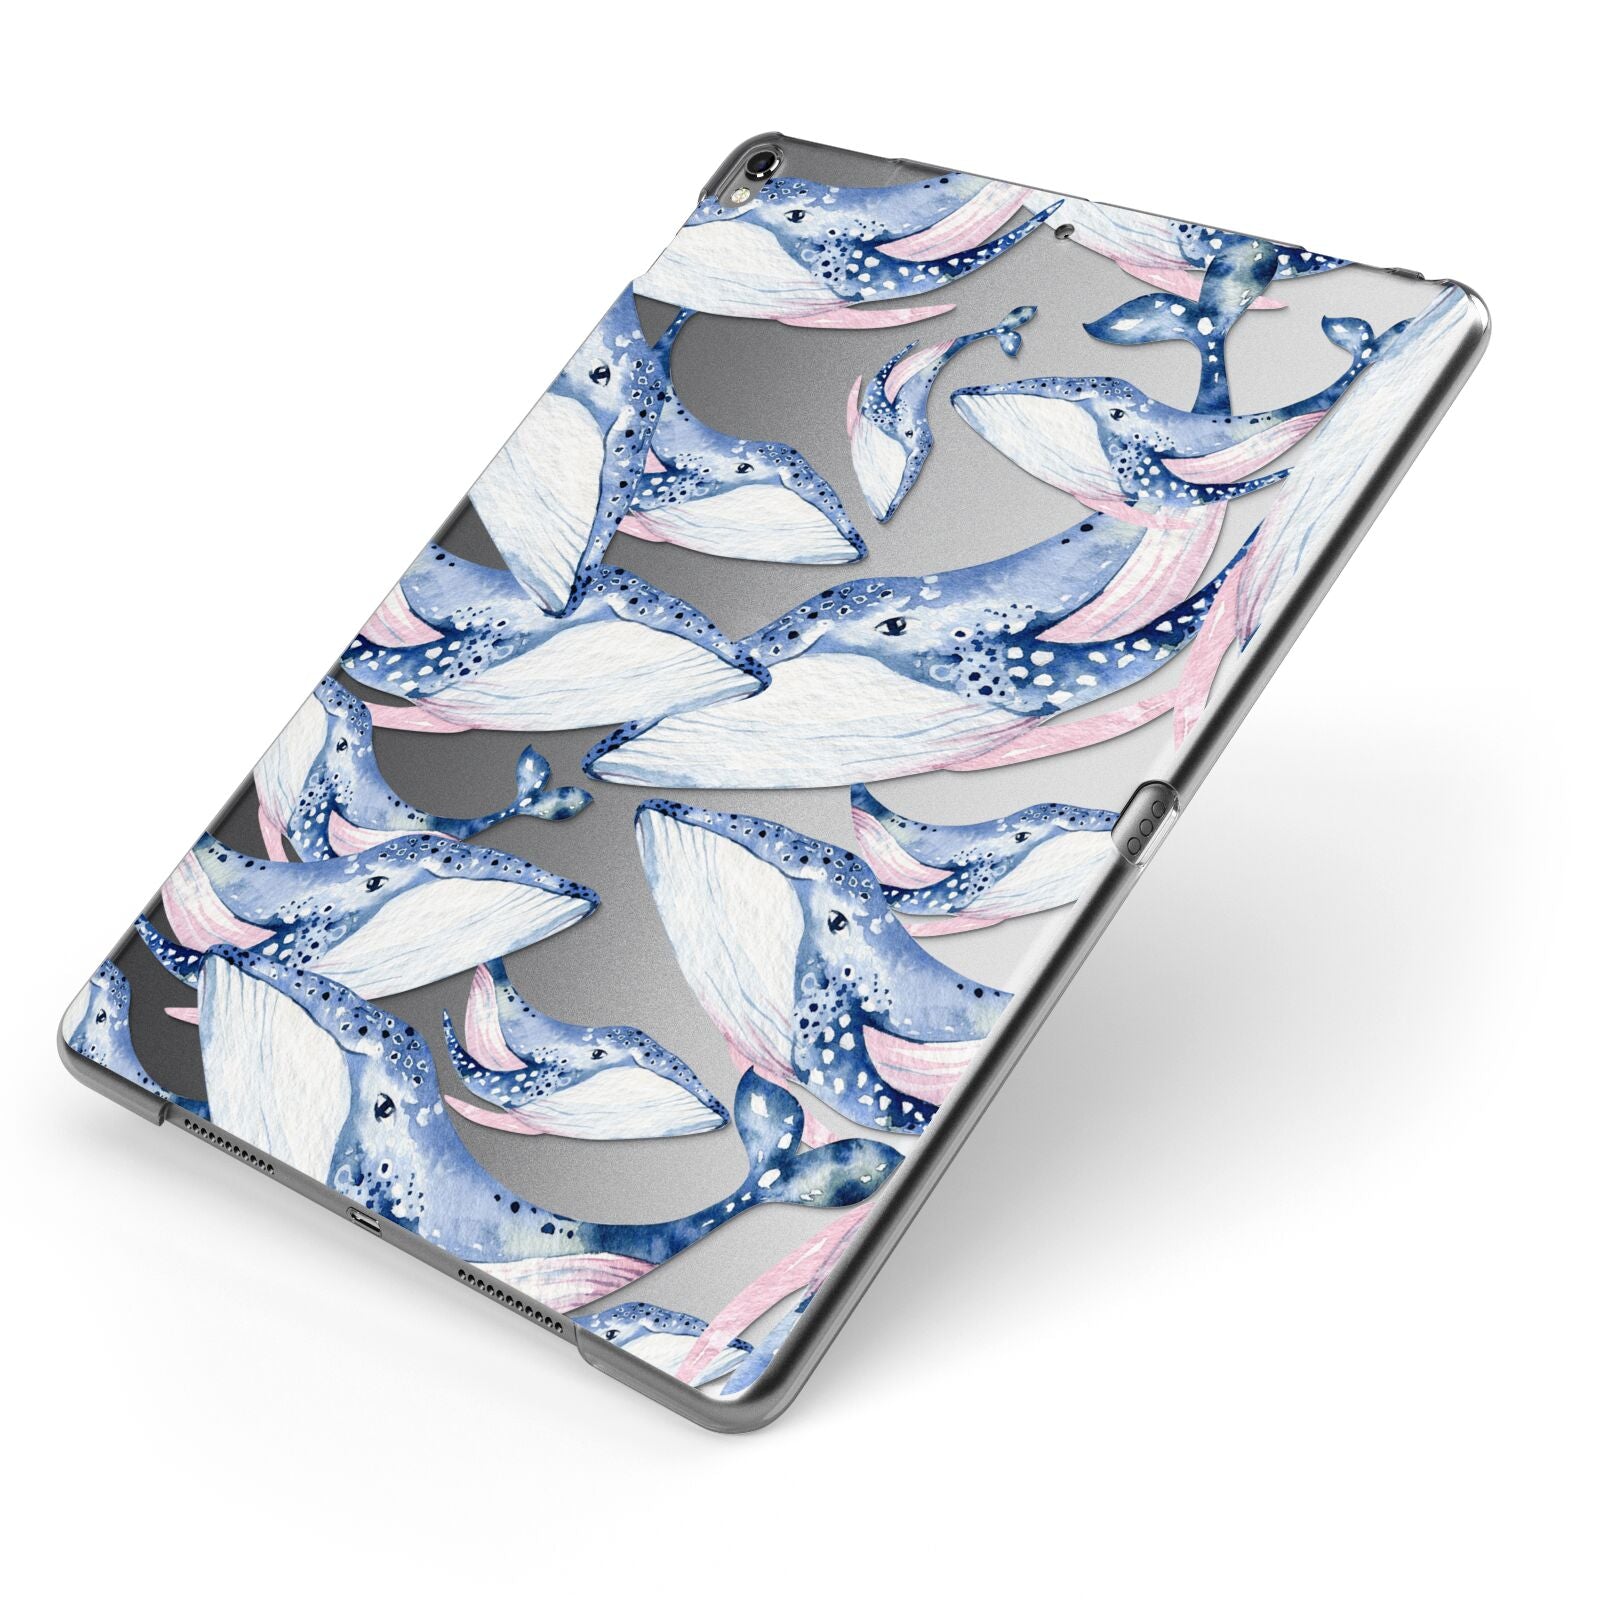 Whale Apple iPad Case on Grey iPad Side View